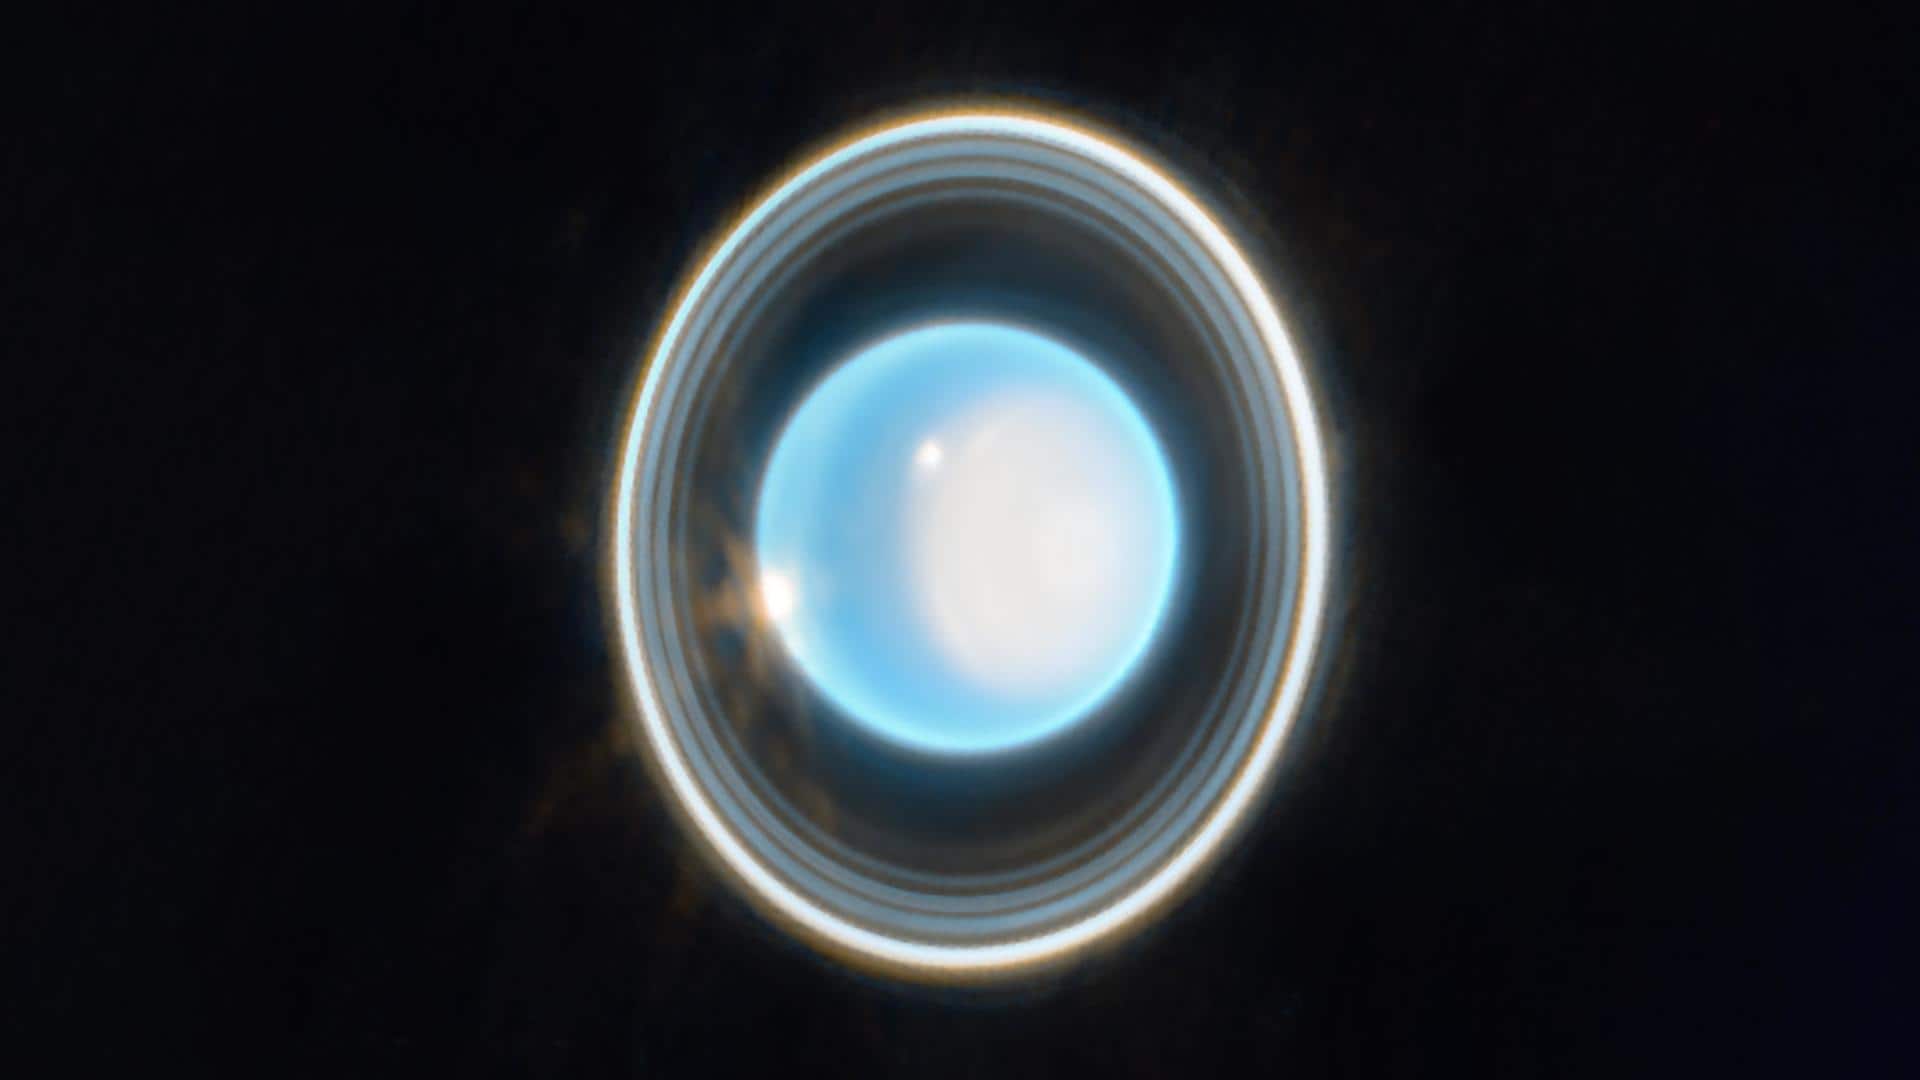 NASA's JWST captures Uranus's ring system in stunning details